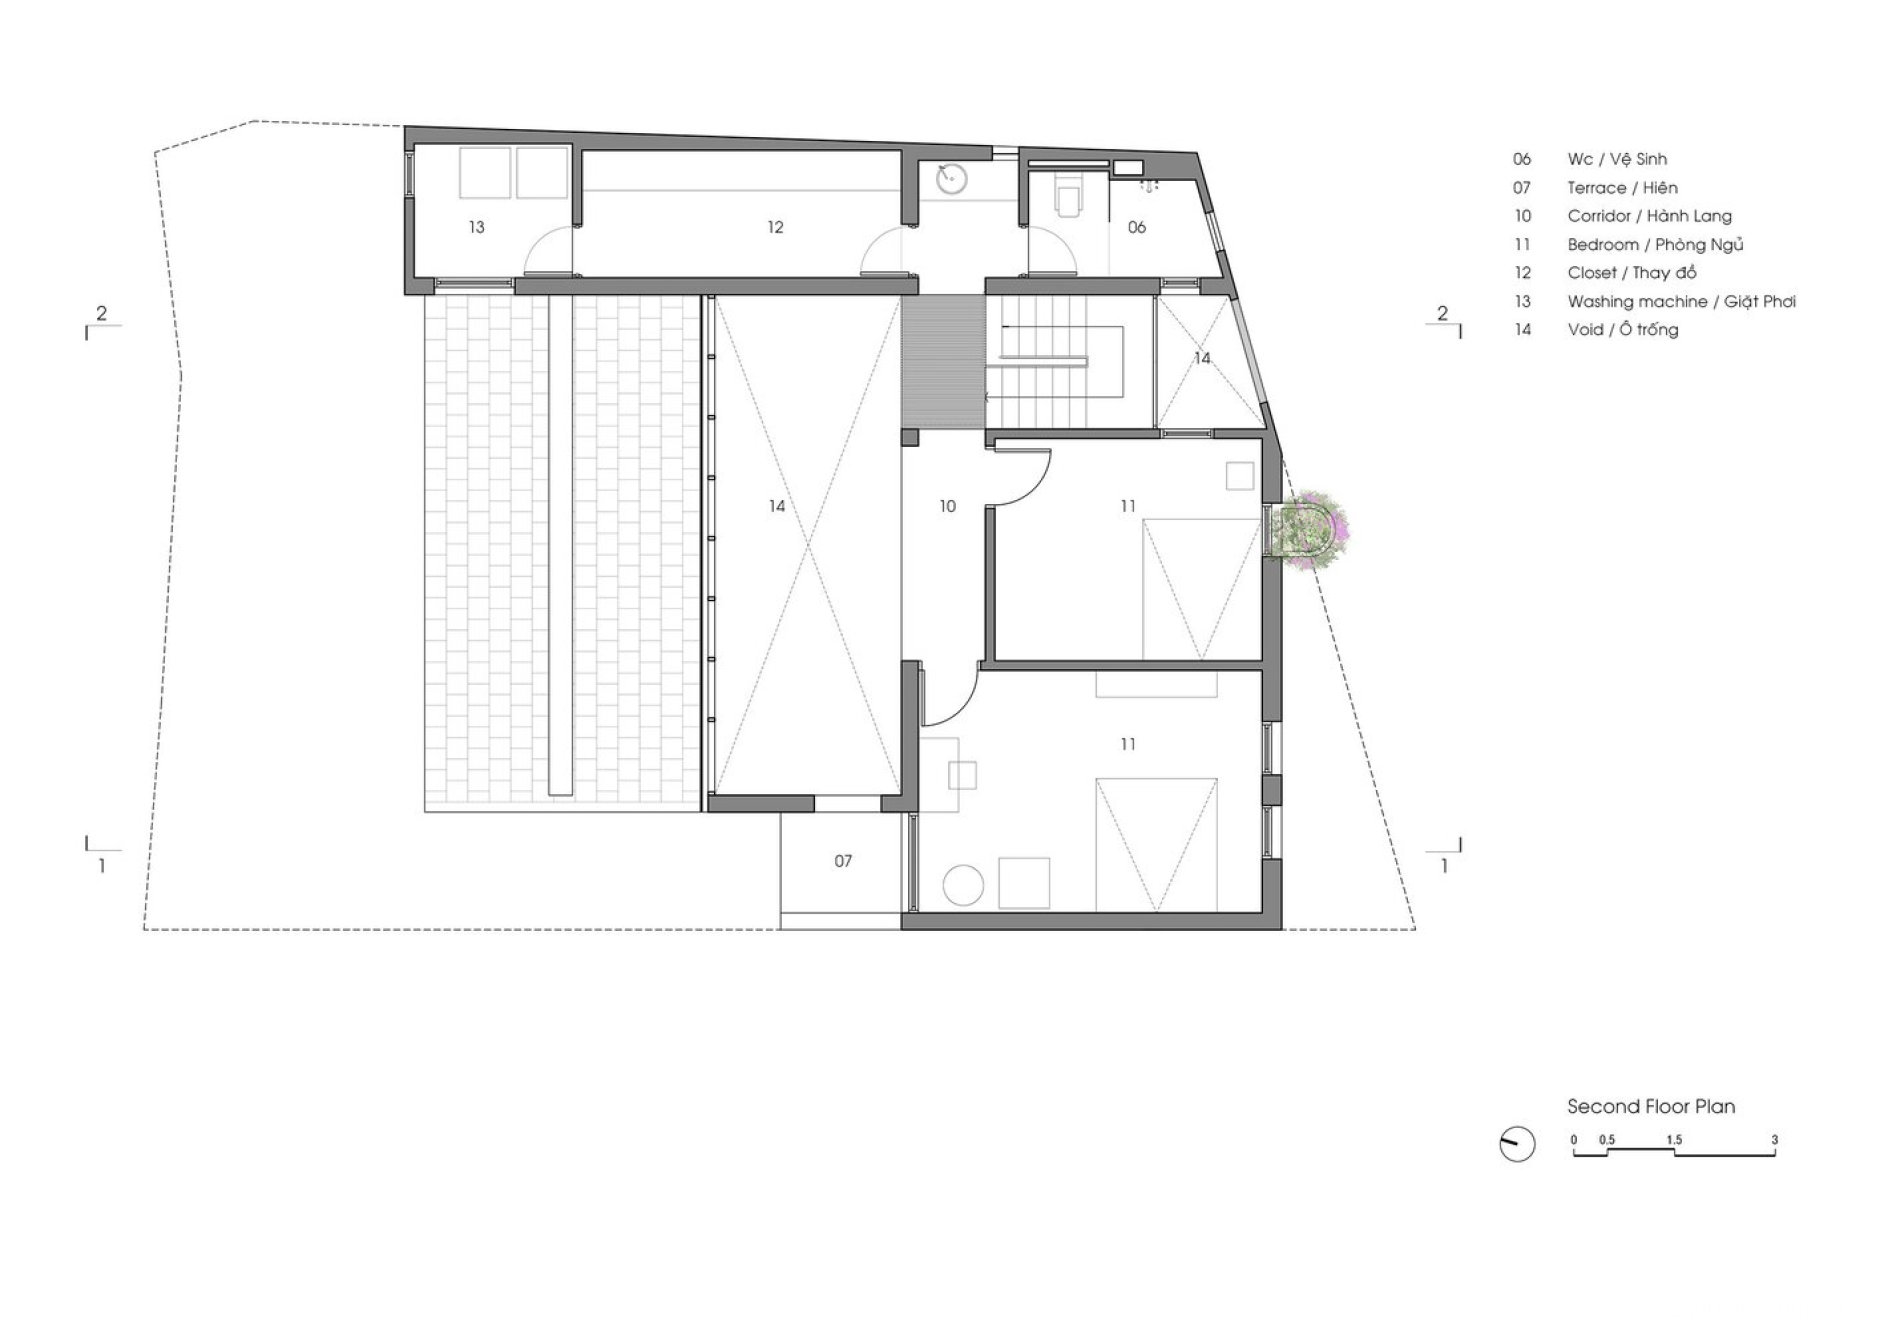 Dom Architect Studio丨The Tiamo House丨越南-62